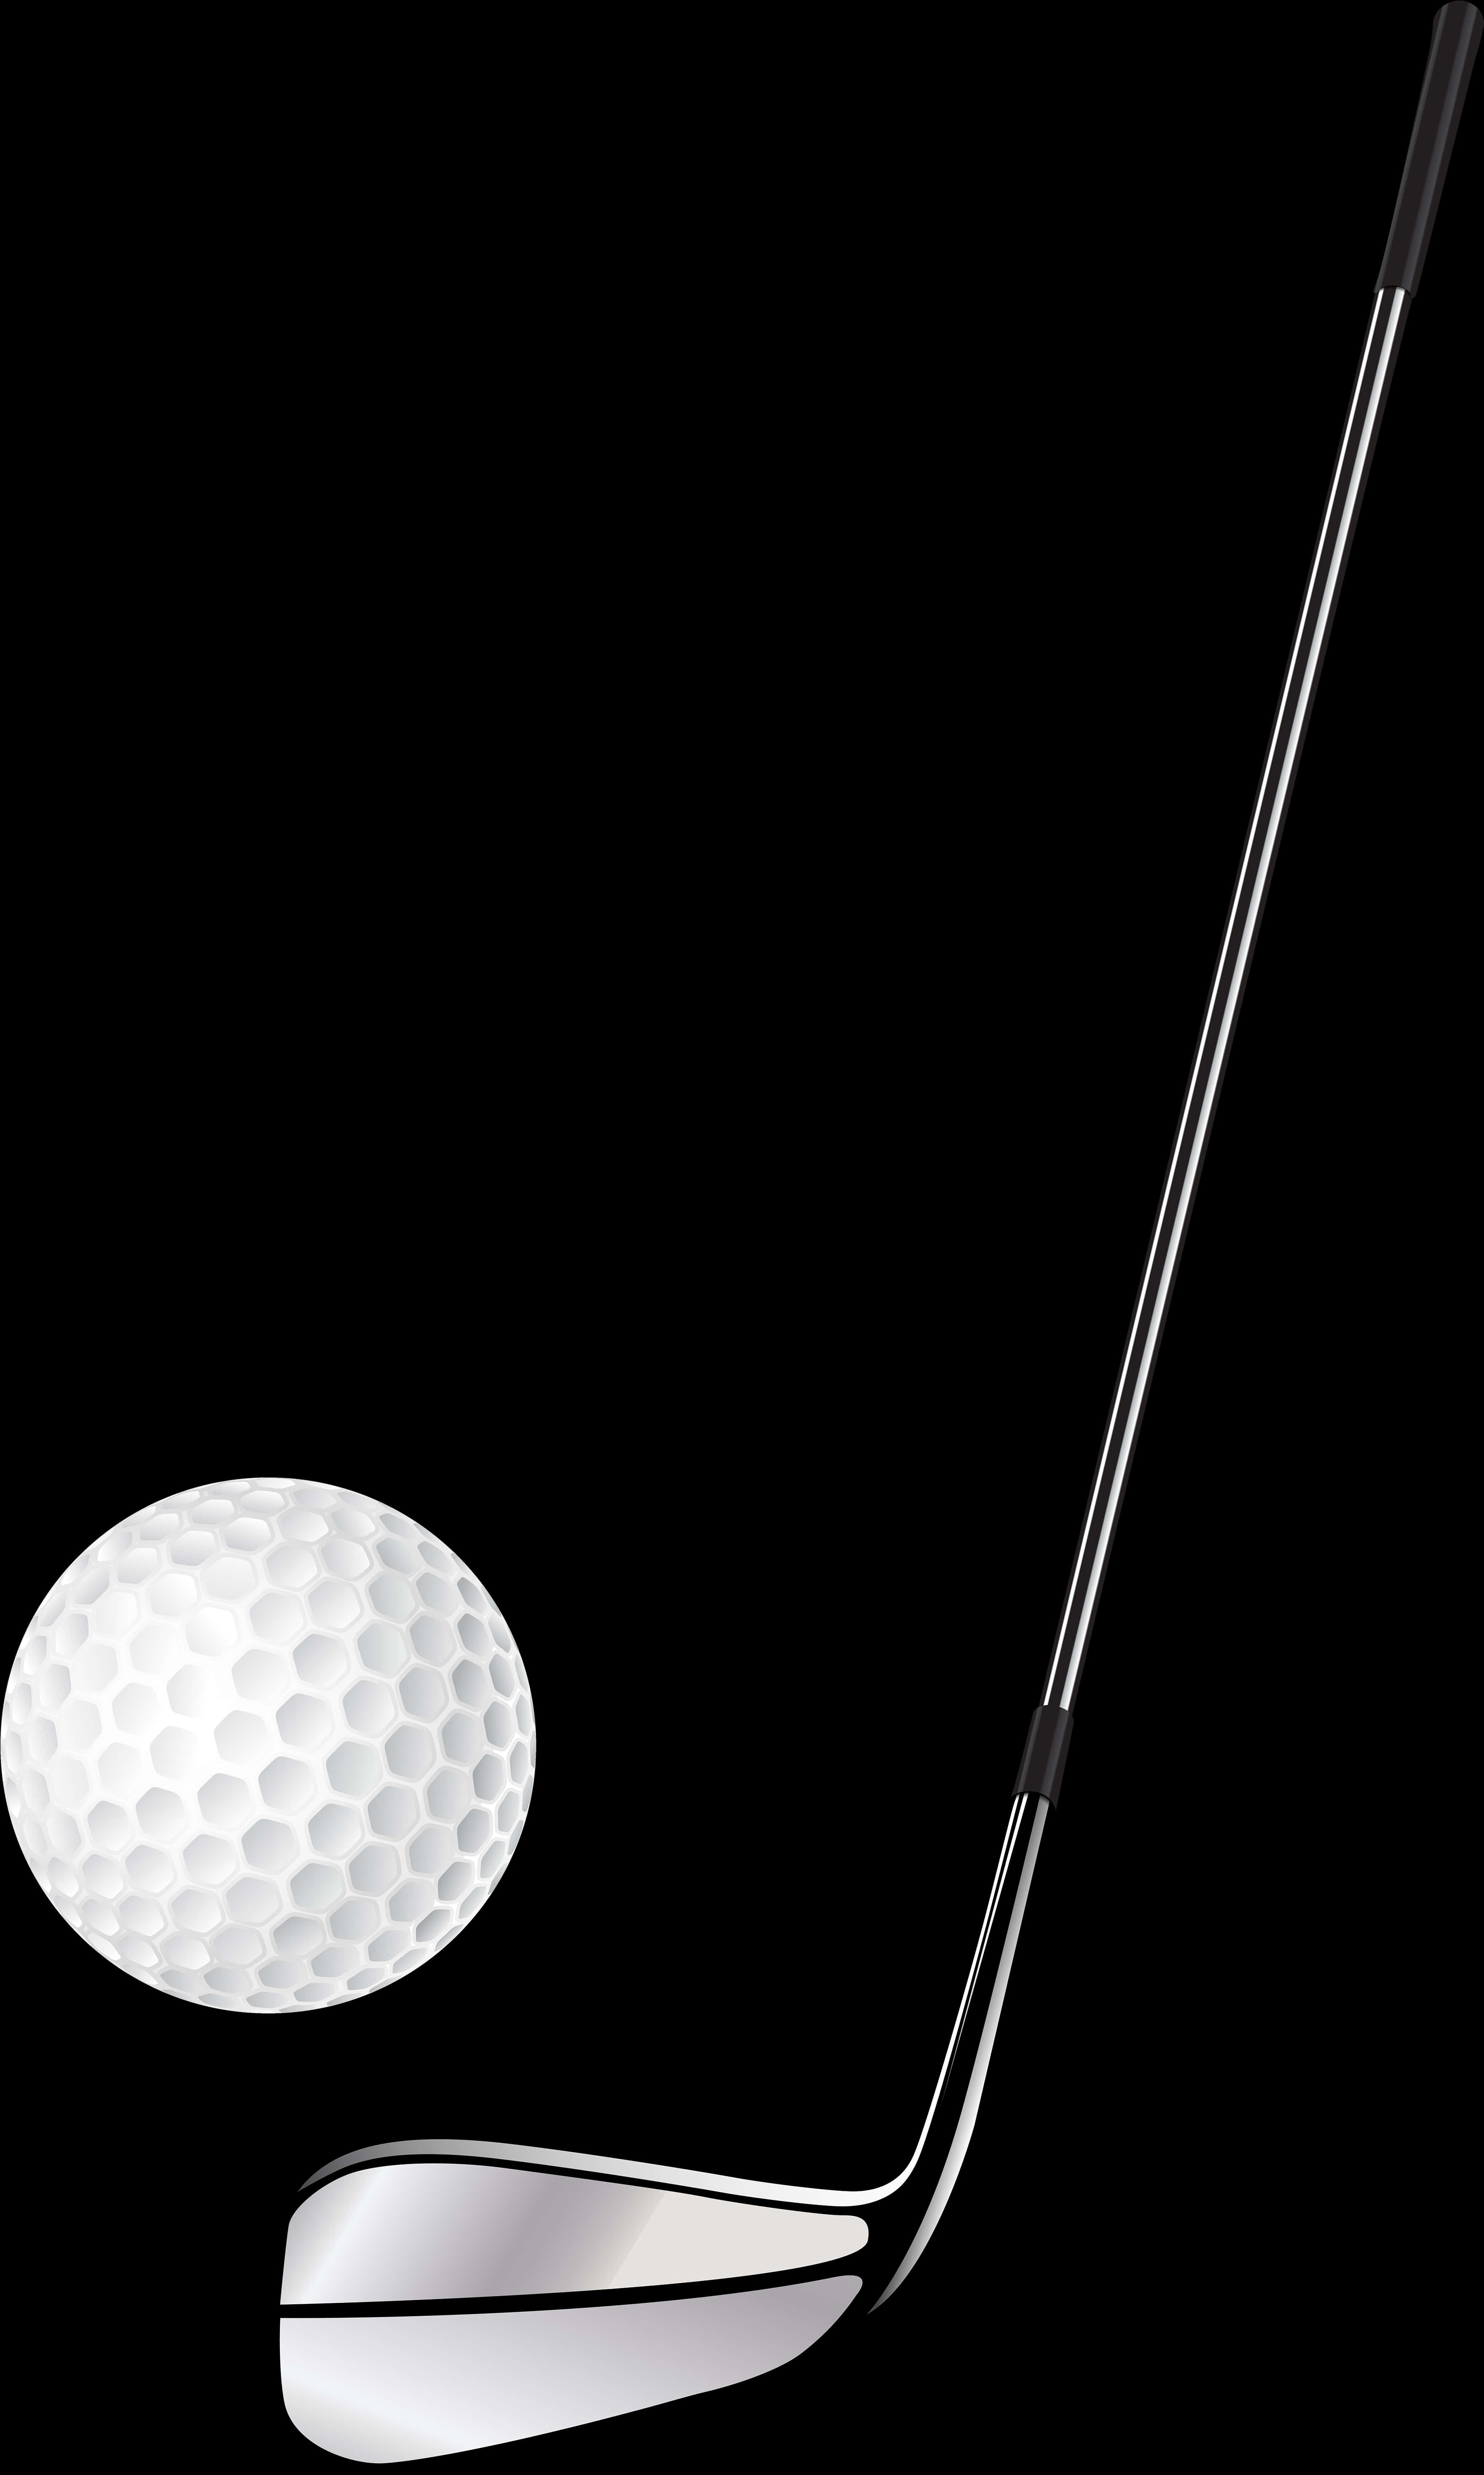 Golf Ball With Wedge Golf Club